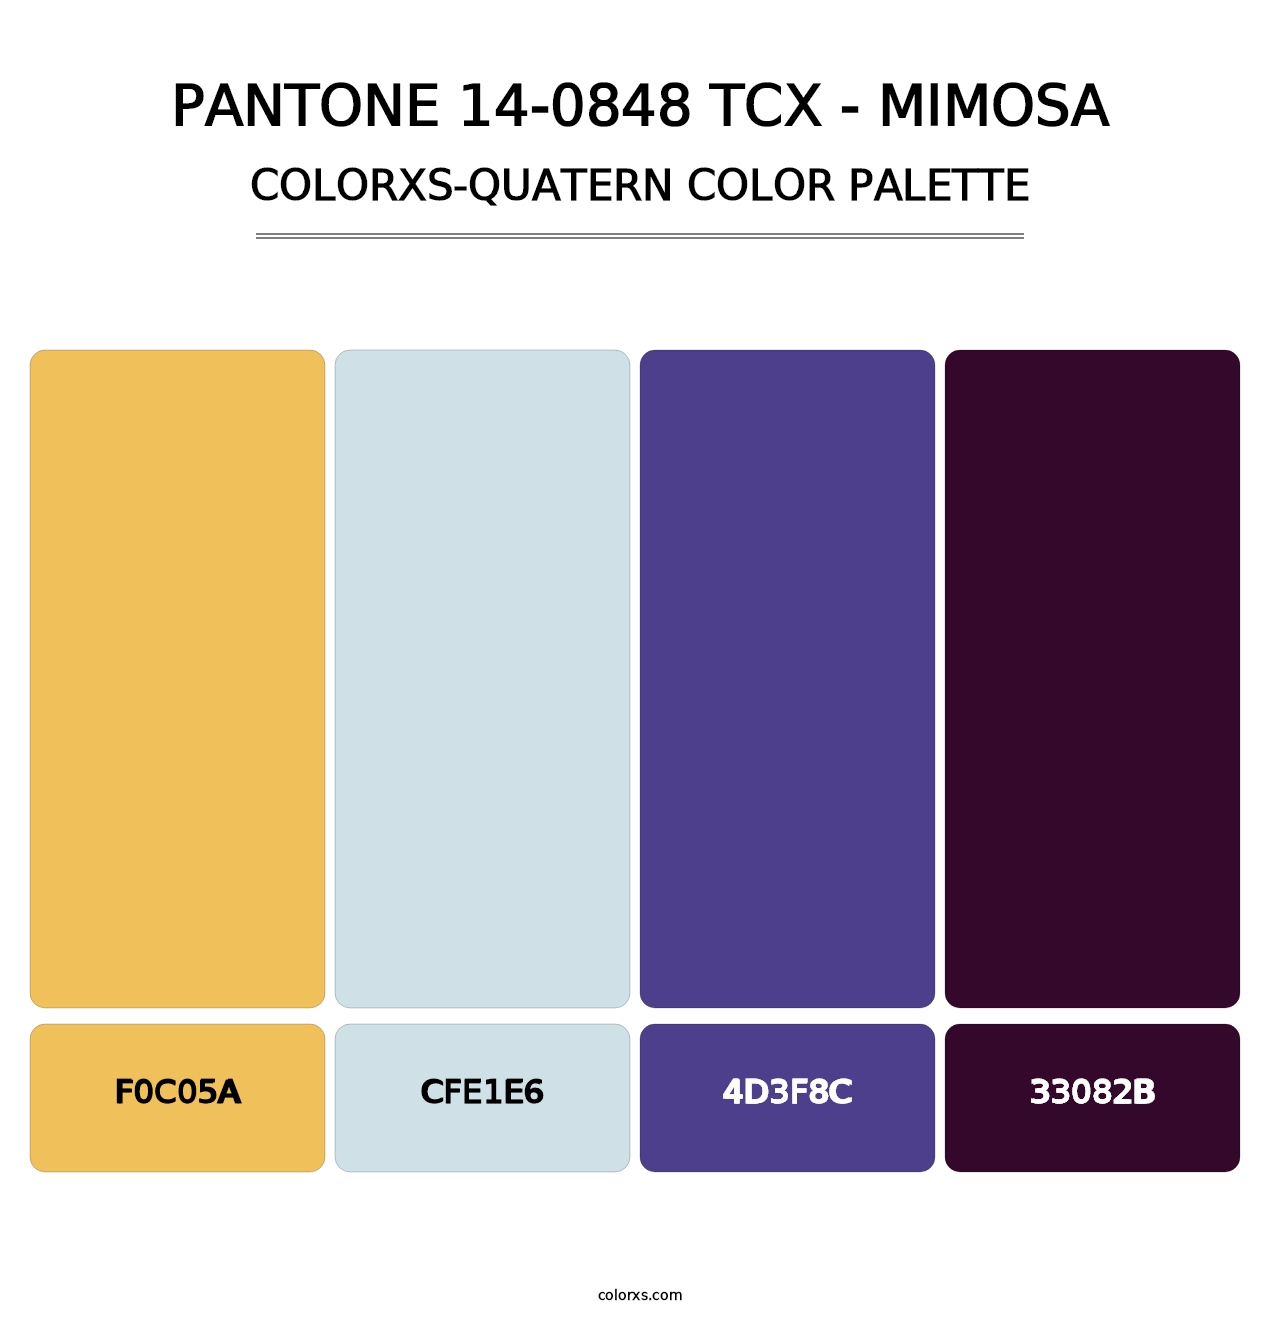 PANTONE 14-0848 TCX - Mimosa - Colorxs Quatern Palette